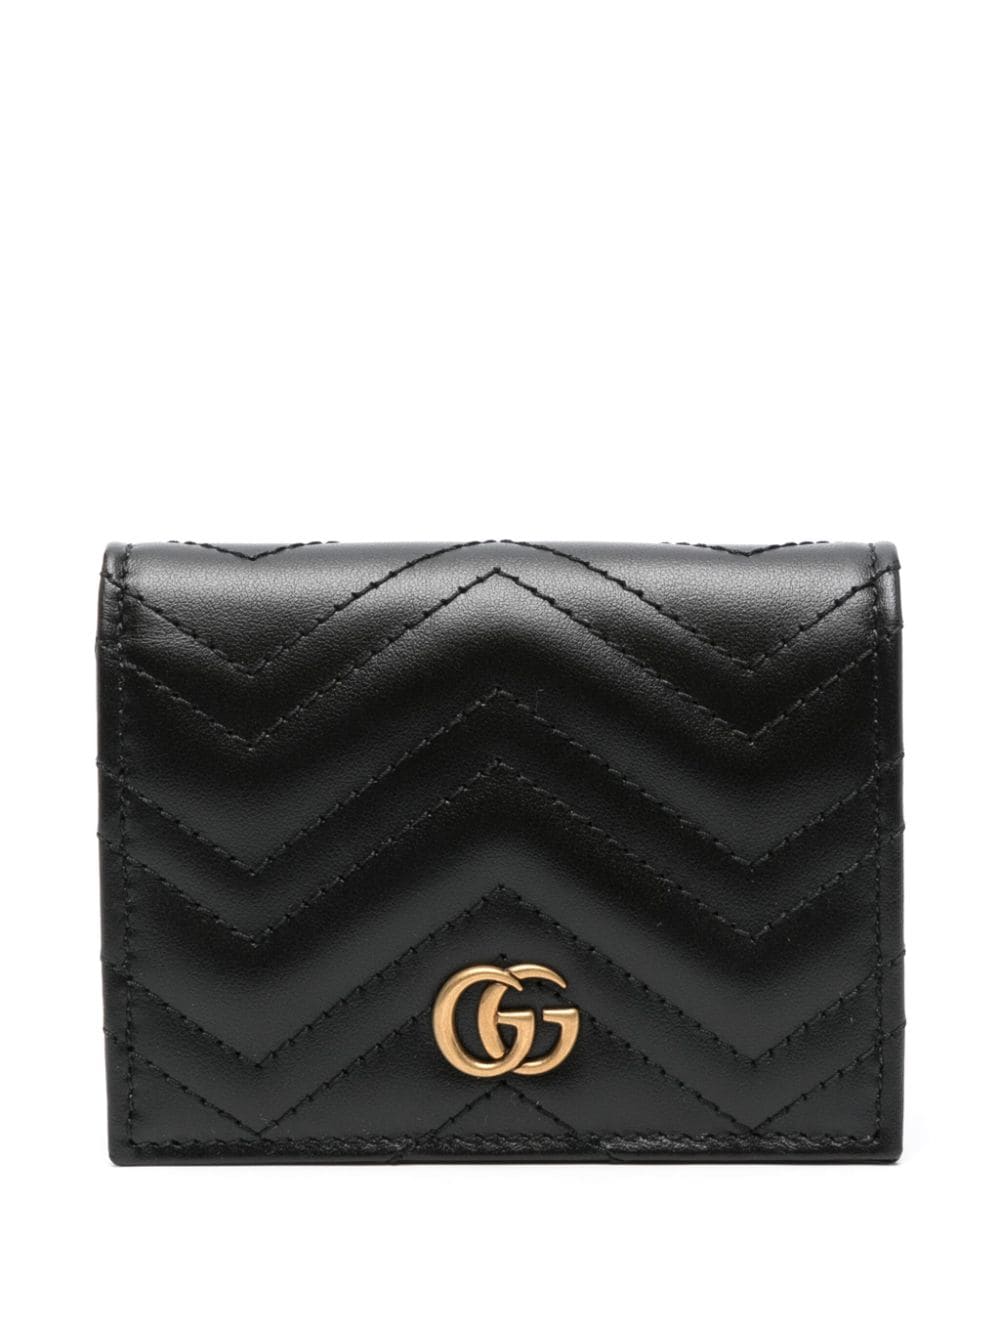 Gucci GG Marmont leather wallet - Black von Gucci